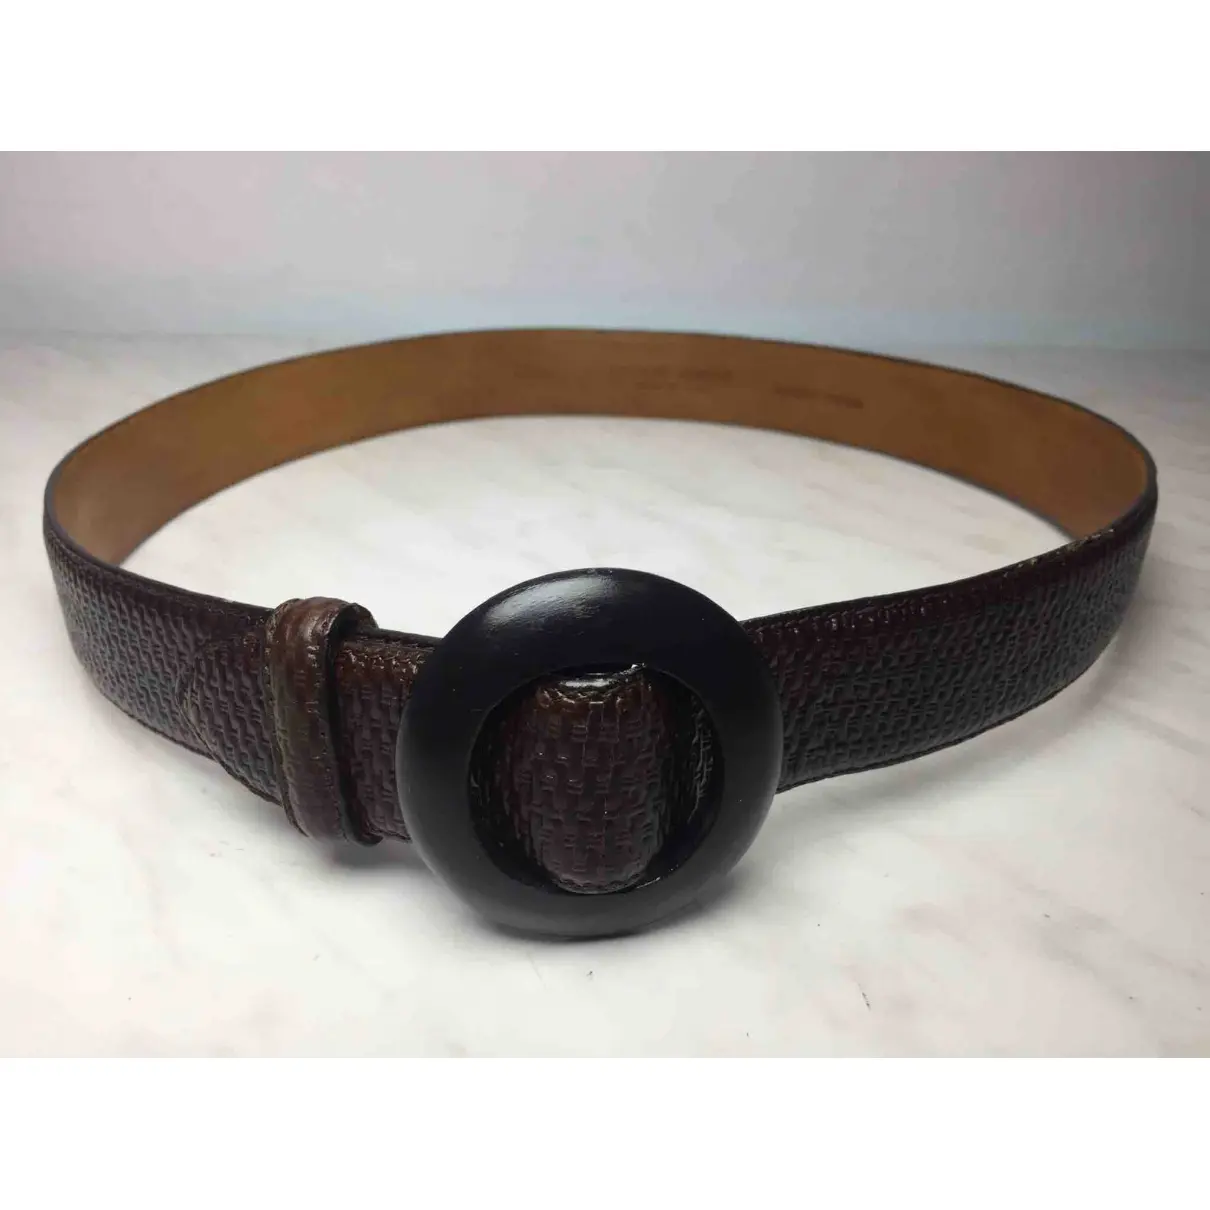 Buy Giorgio Armani Leather belt online